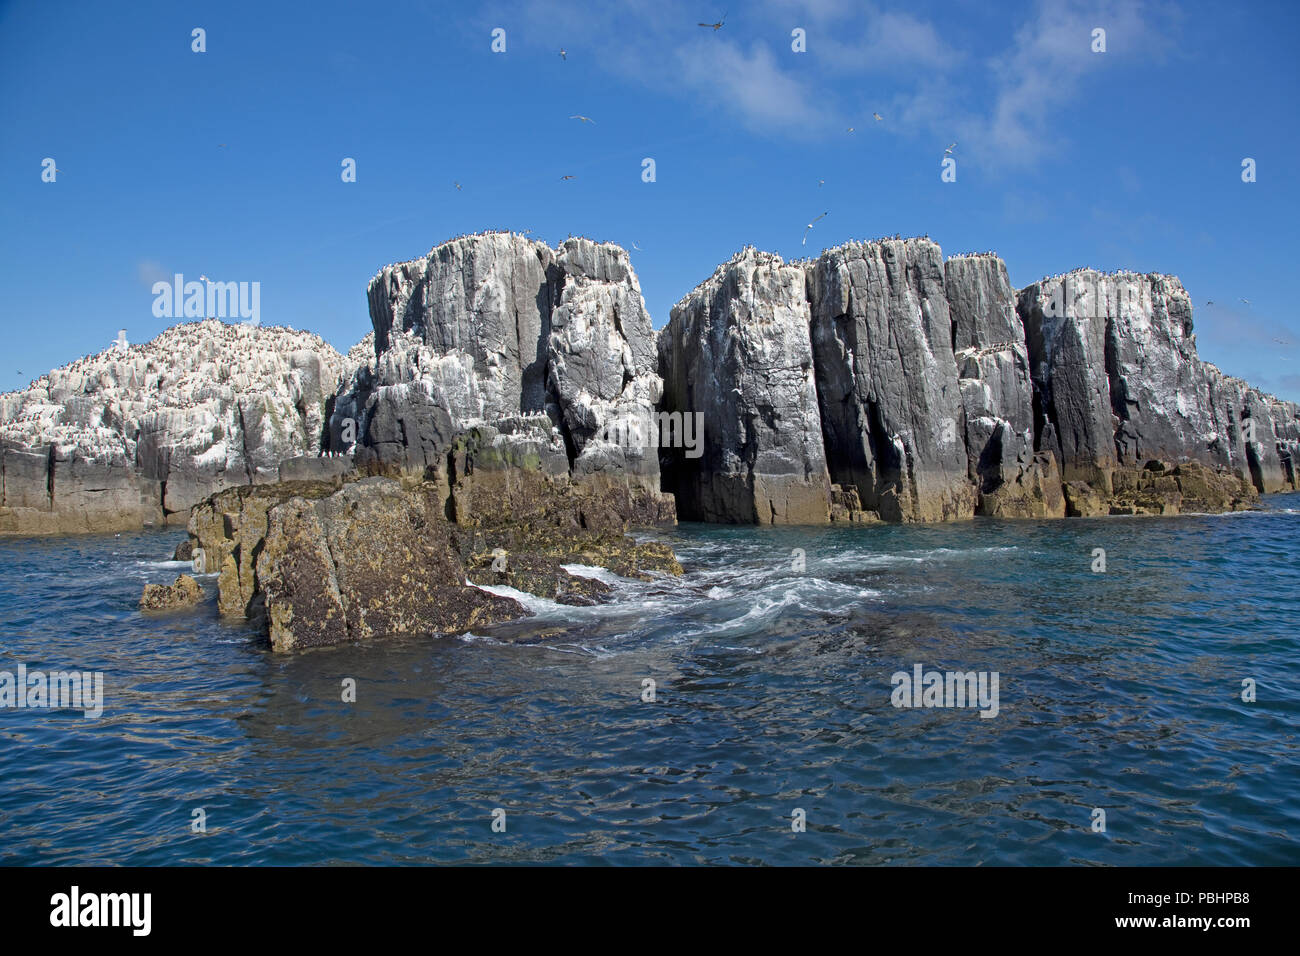 Pillars of rock with guillemot colonies Staple Island Farne Island Northumberland UK Stock Photo